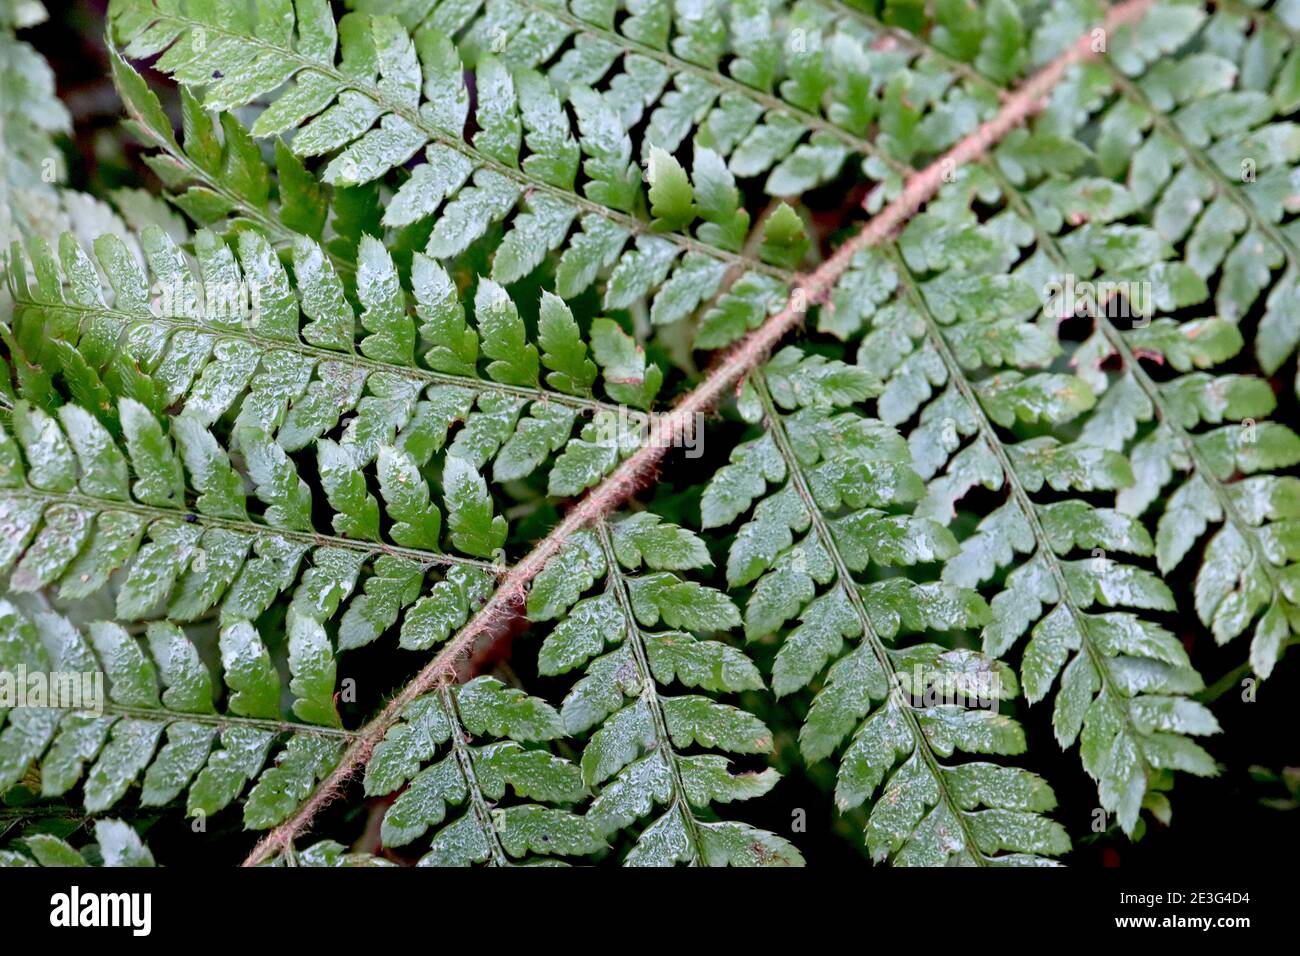 Polystichum setiferum soft shield fern – lacy fronds of a fern leaf  January, England, UK Stock Photo